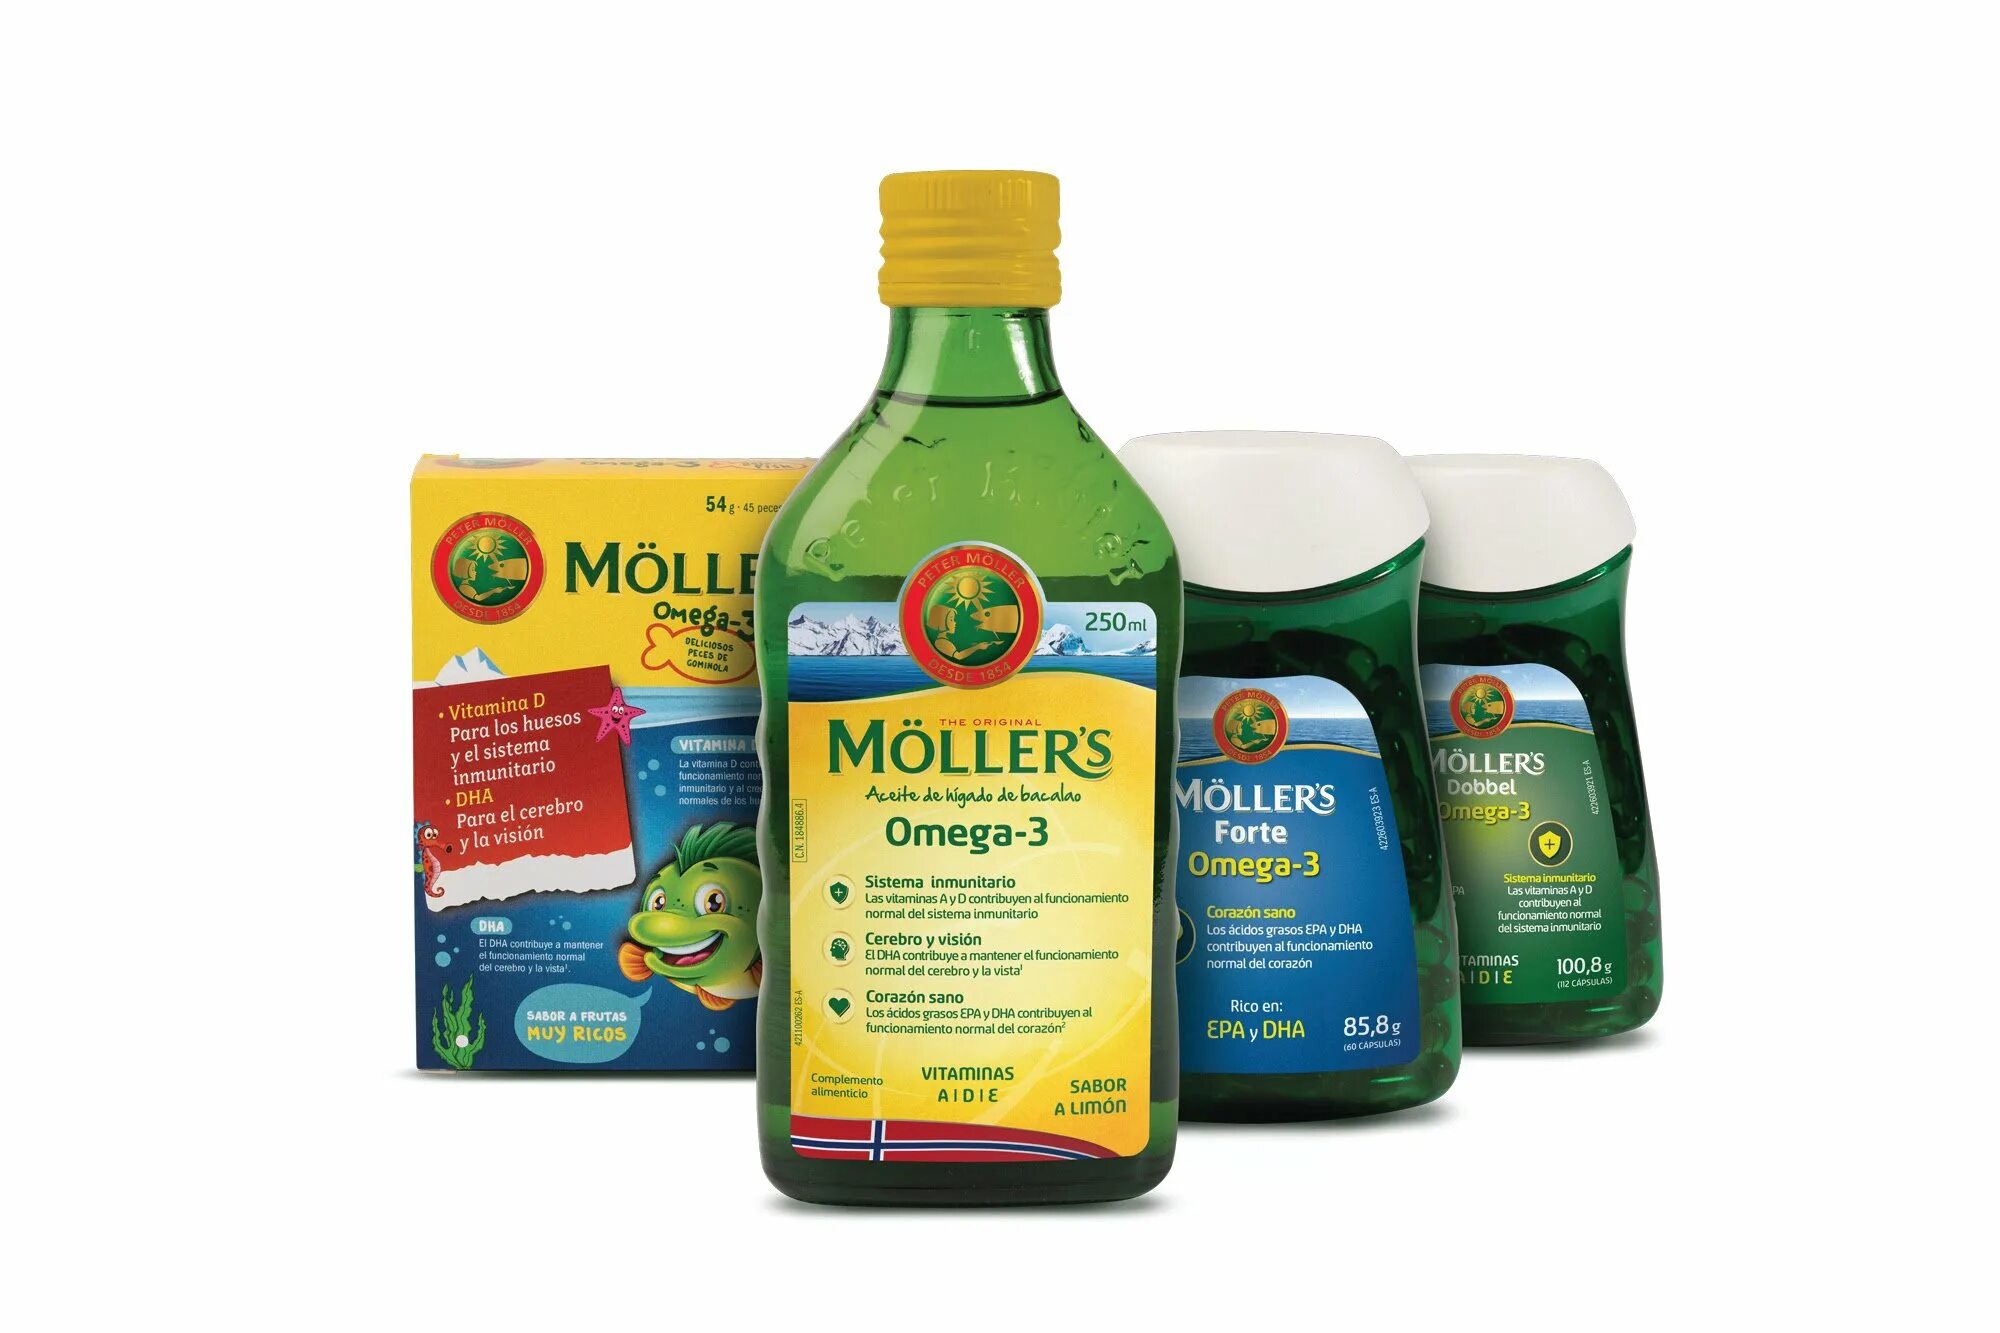 Омега меллер купить. Mollers Omega Forte. Mollers 250ml. Моллер витамины. Mollers Forte Omega 3.